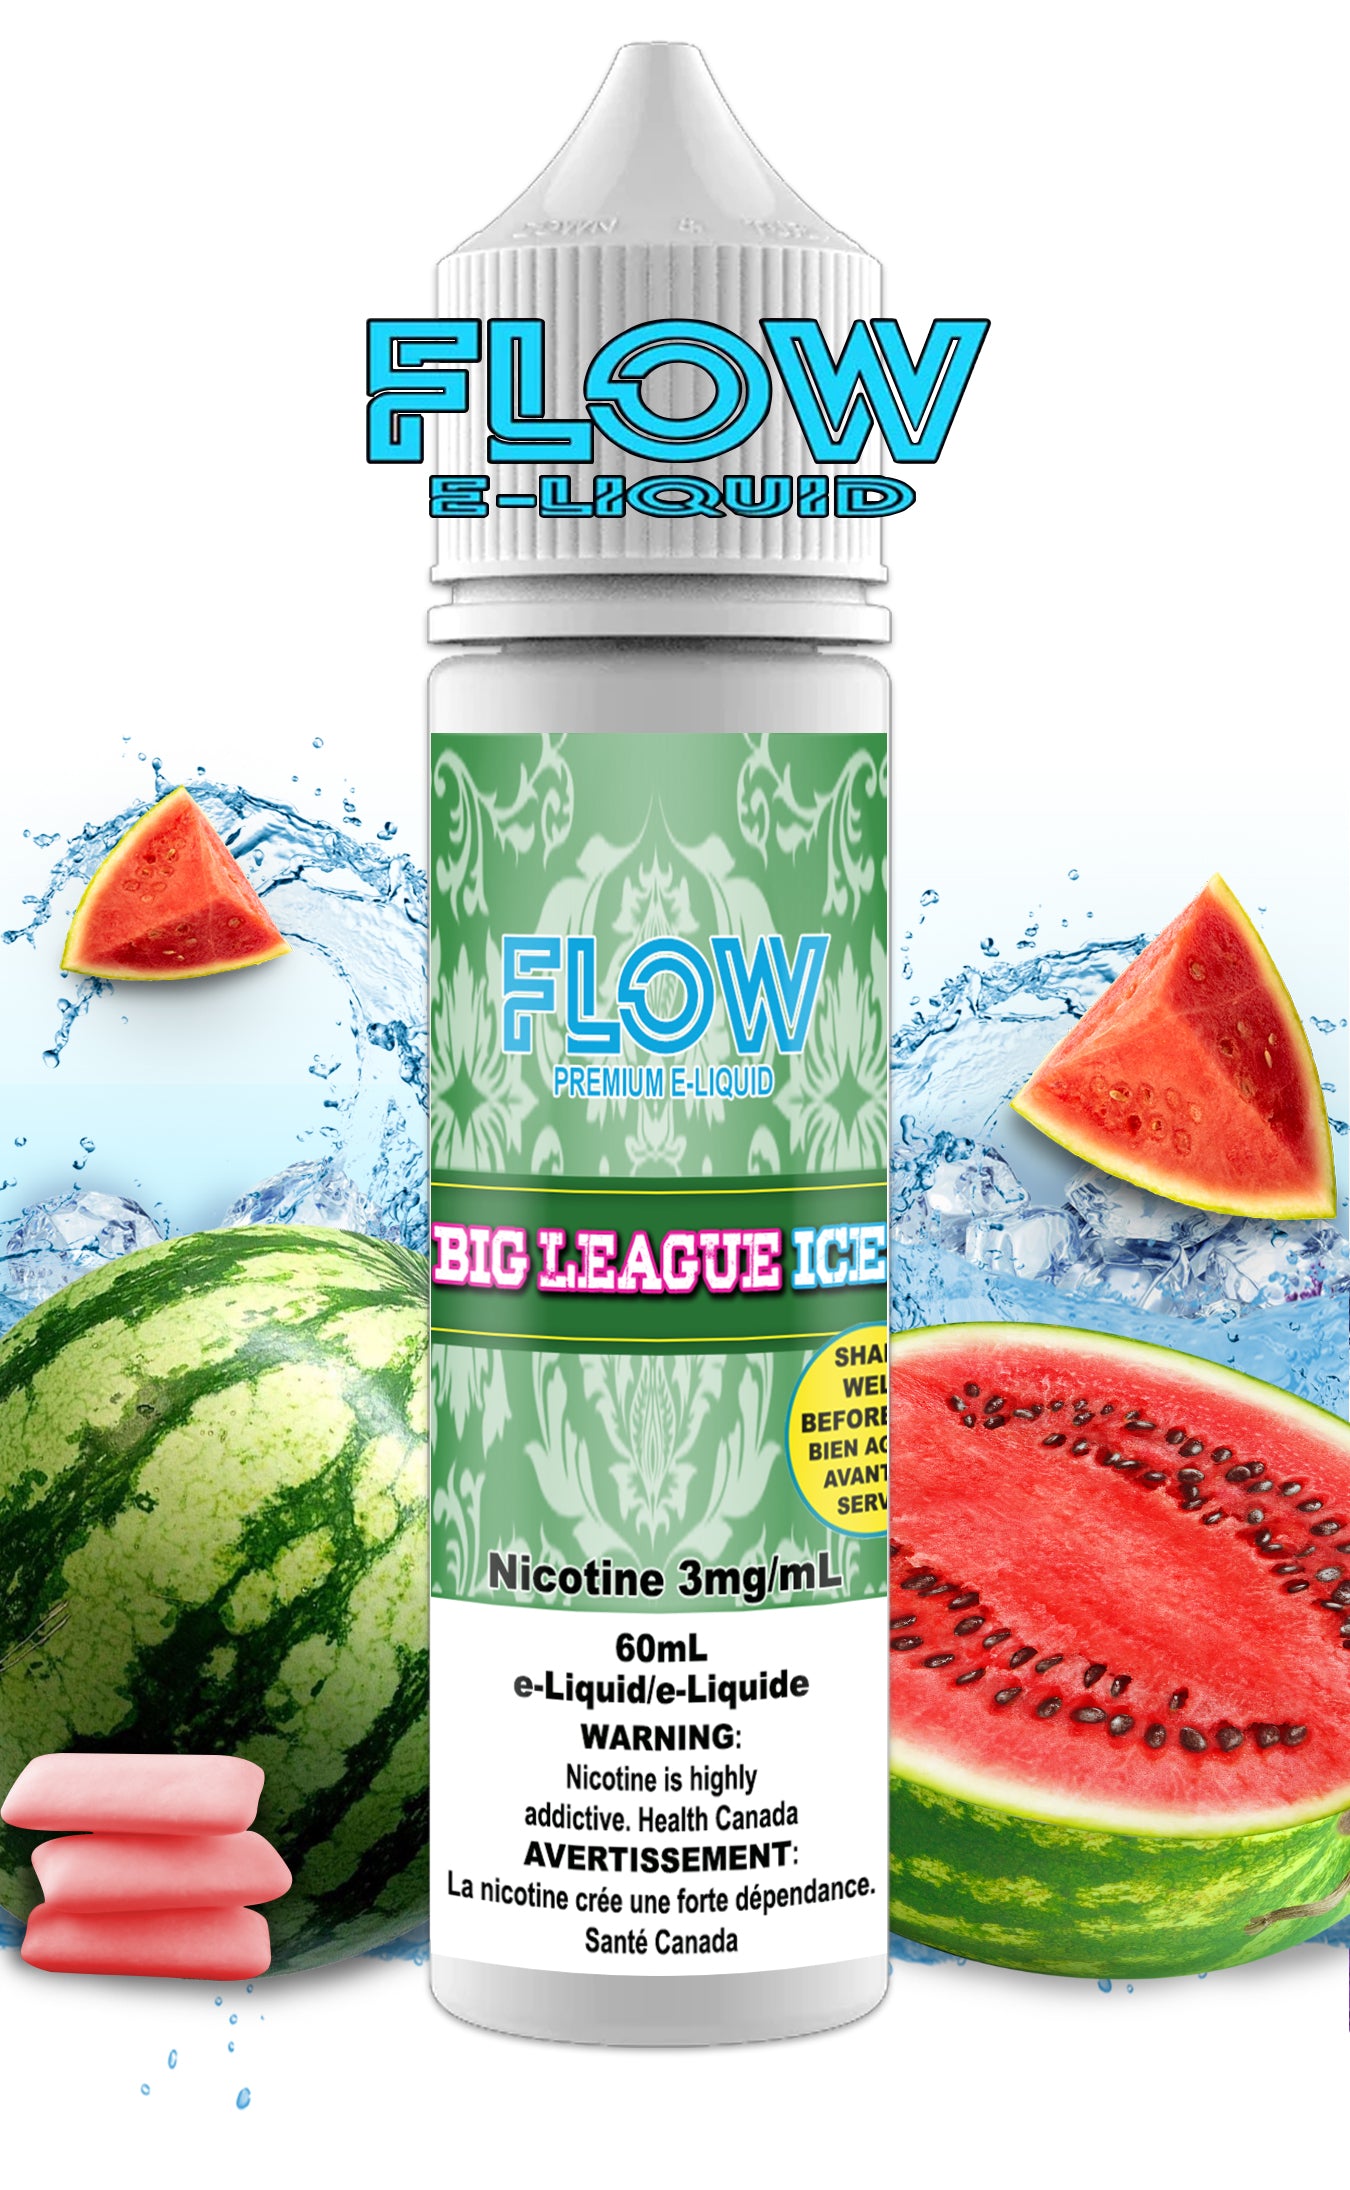 FLOW E-LIQUID - BIG LEAGUE ICE